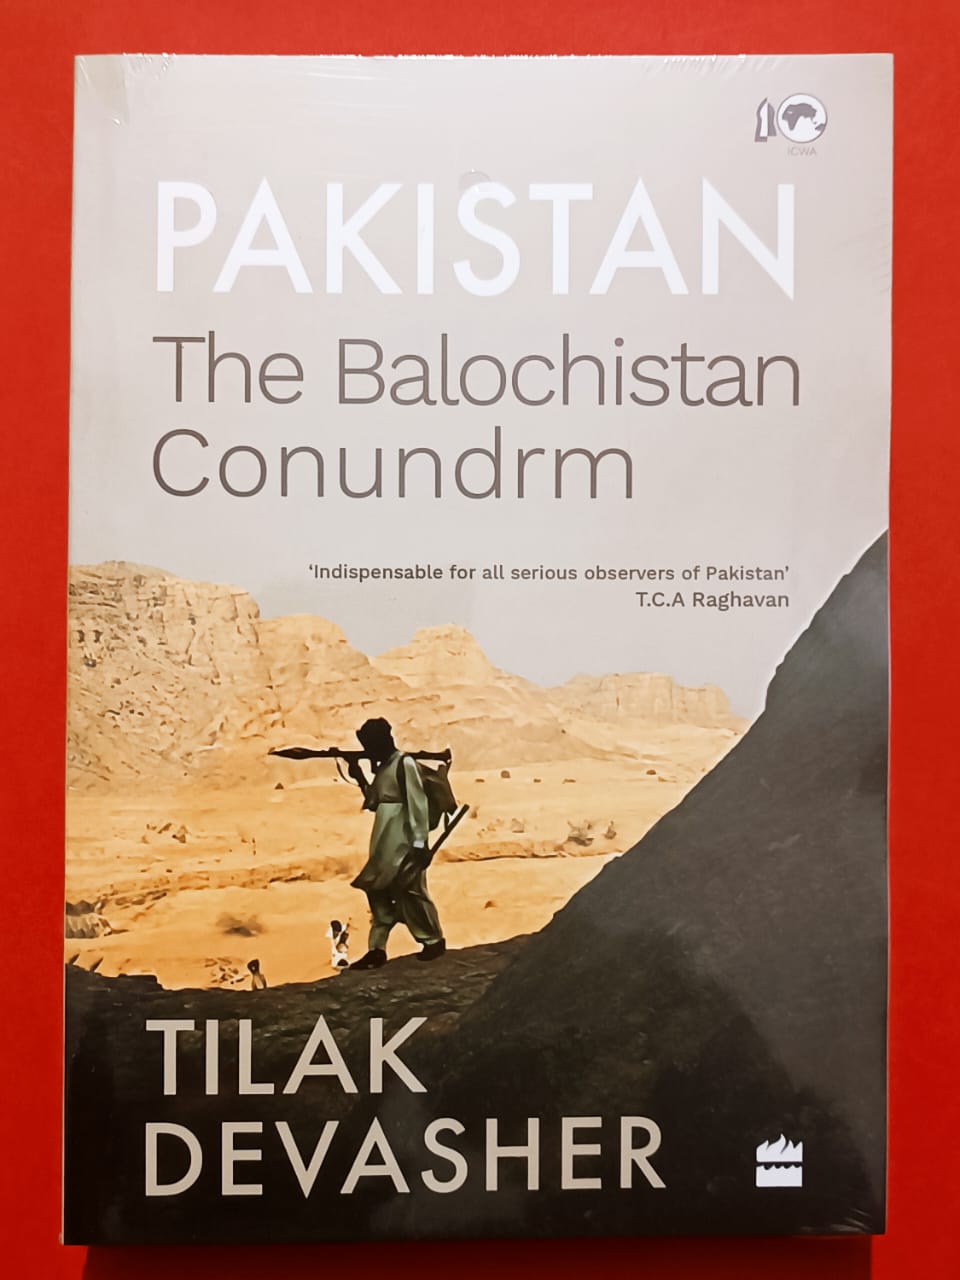 Pakistan The Balochistan Conundrum